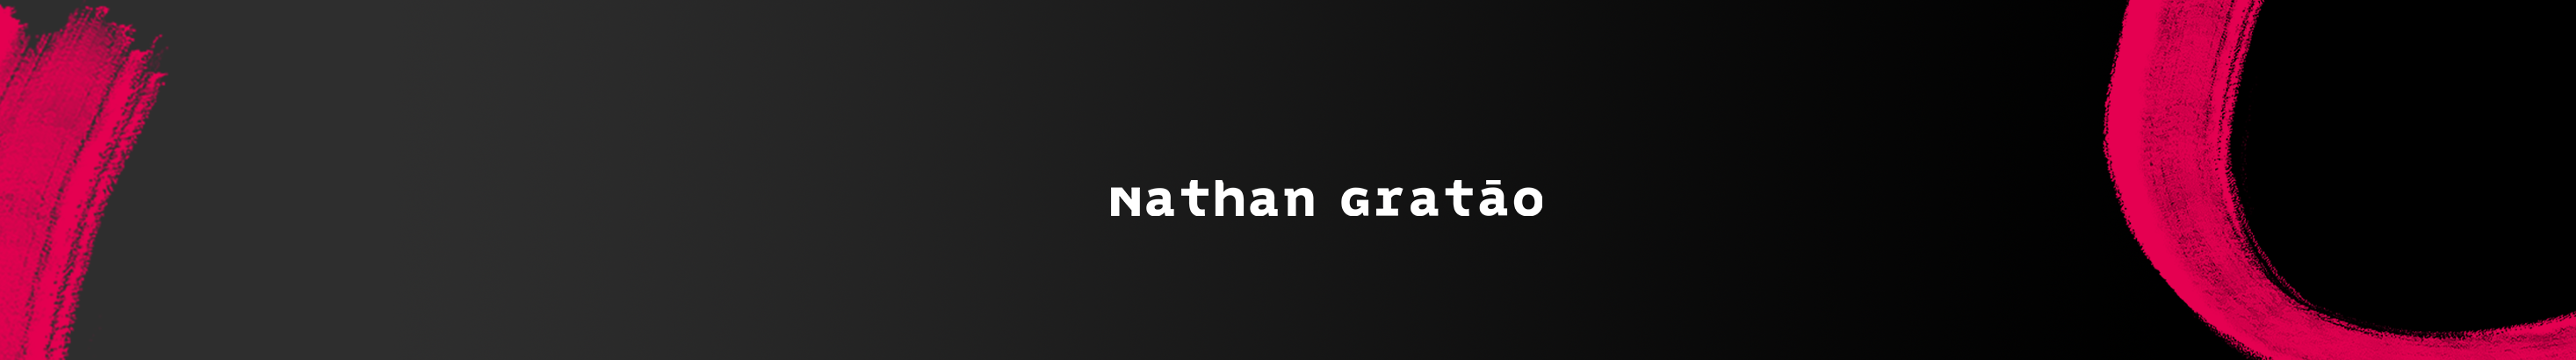 Nathan Gratão's profile banner